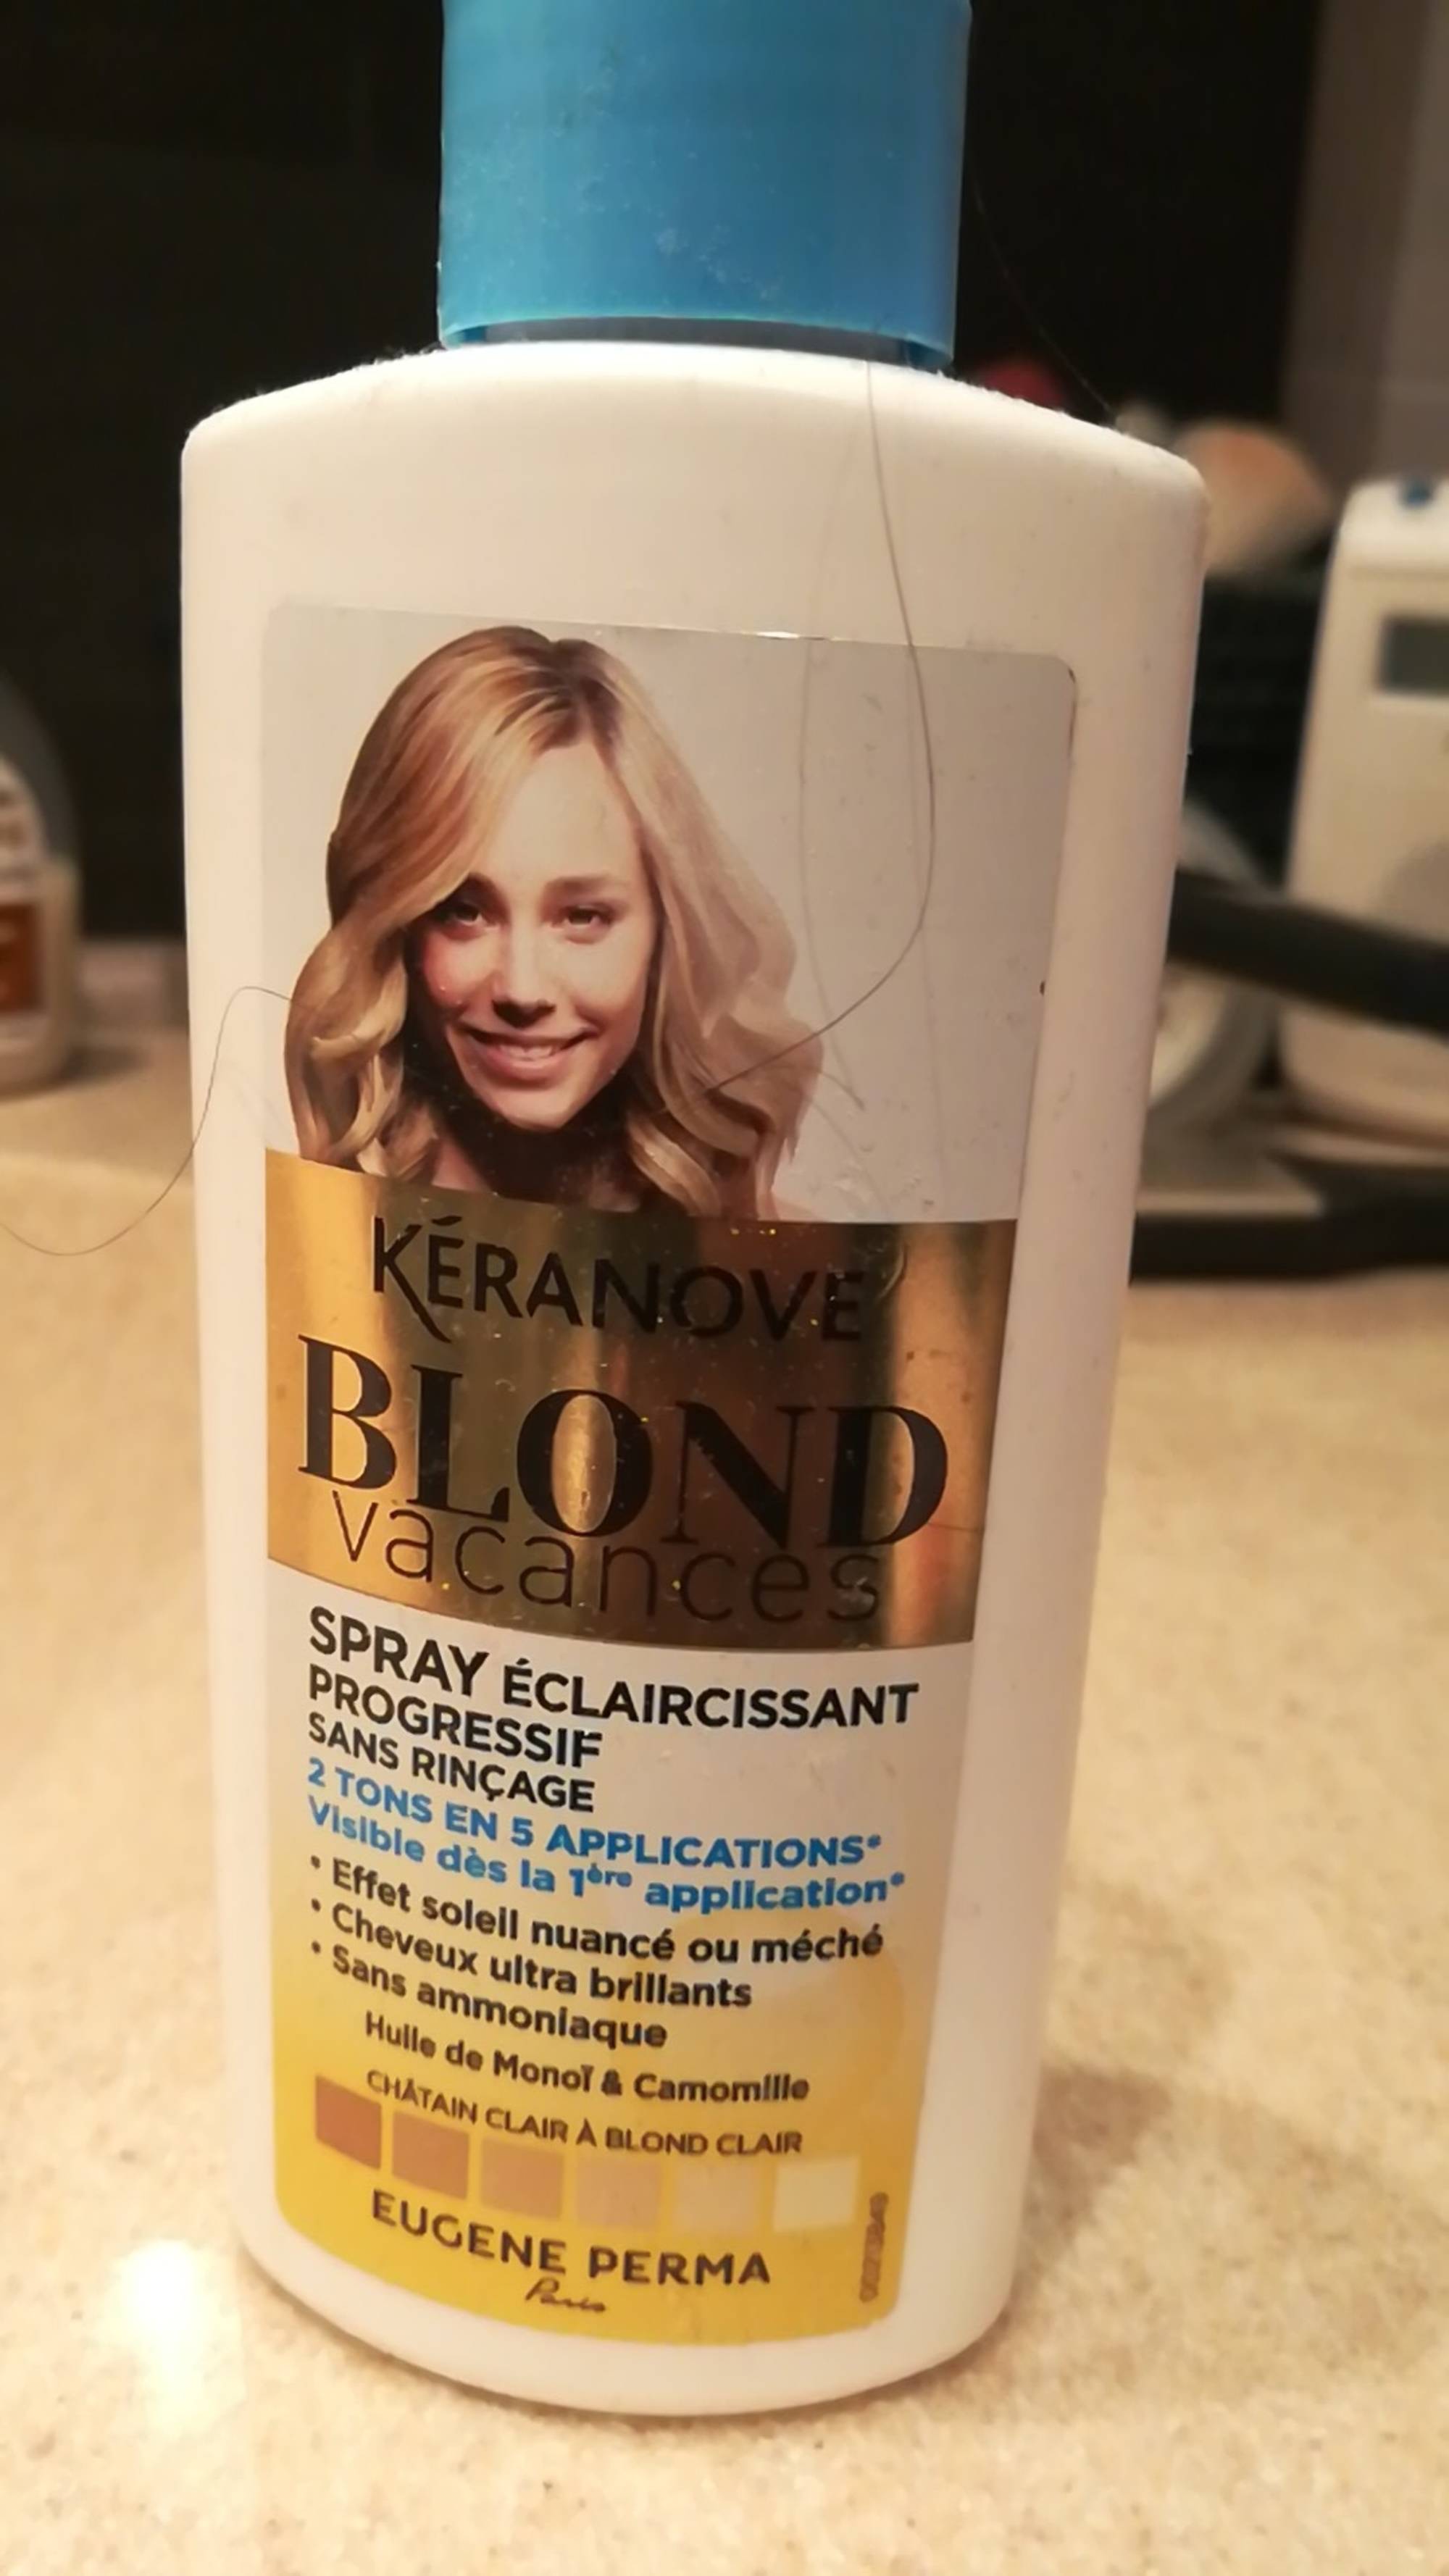 KÉRANOVE - Blond vacances Spray éclaircissant - Châtain clair à blond clair